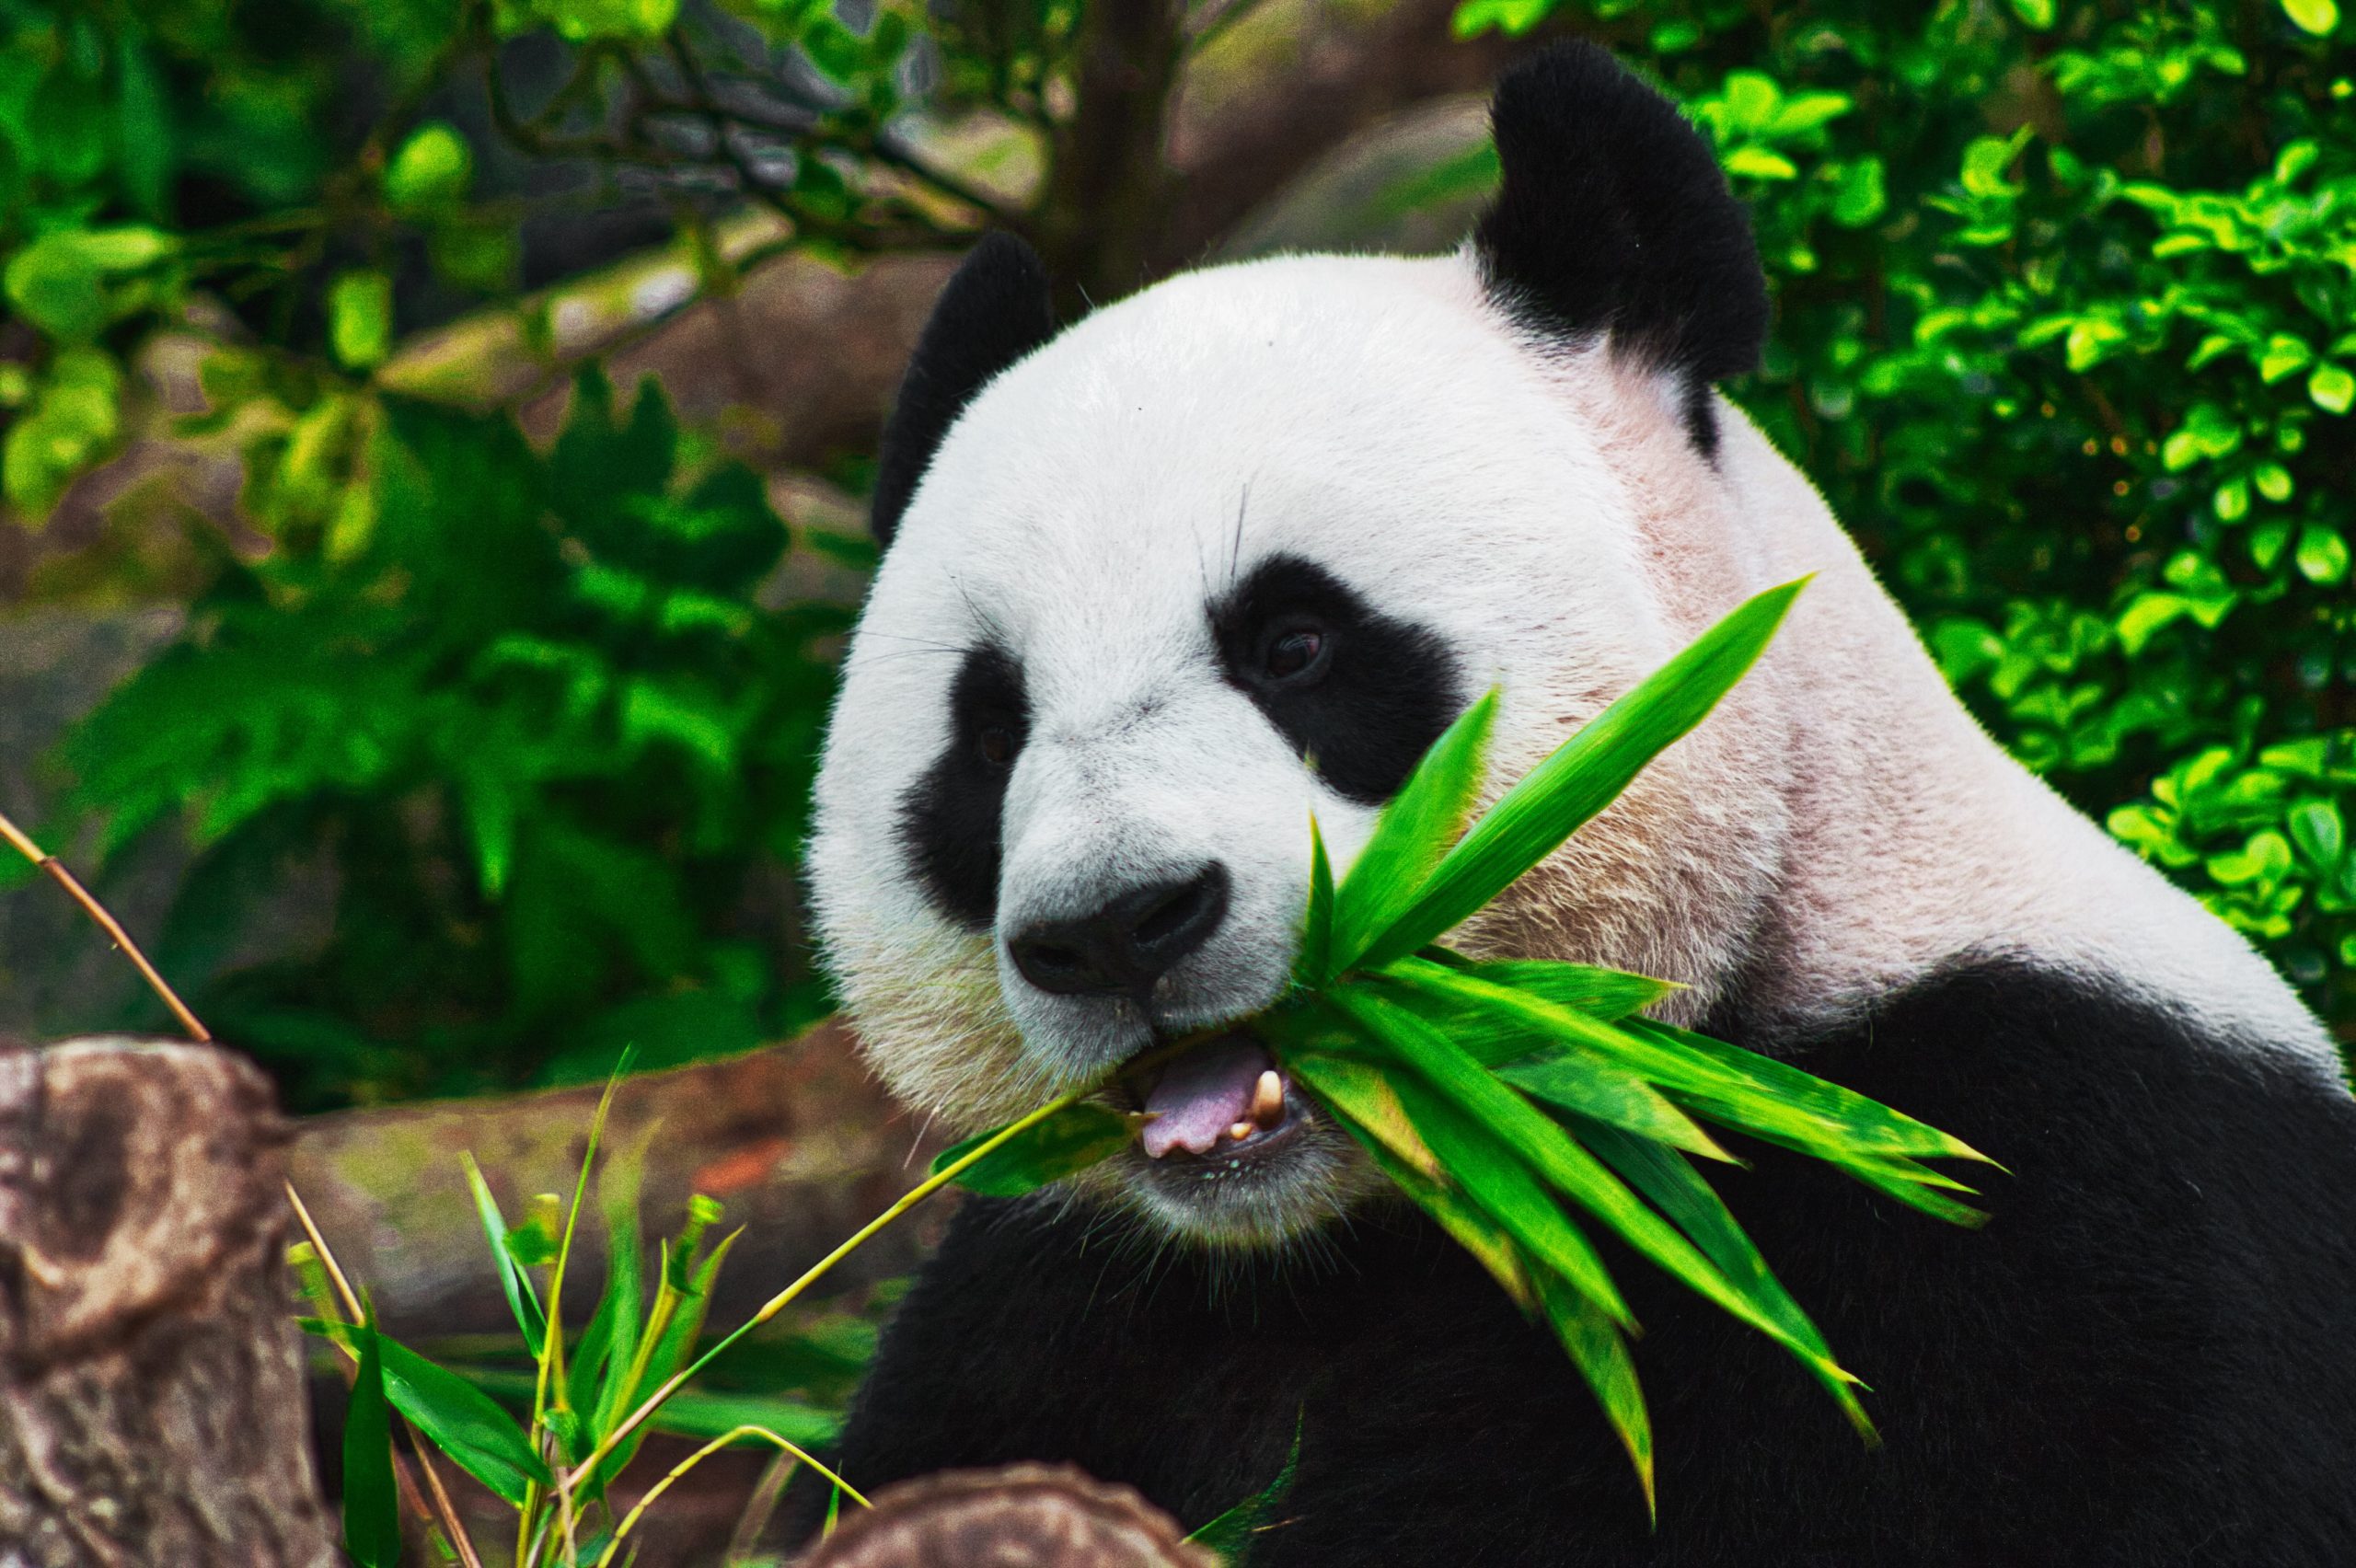 Giant Pandas are No Longer Critically Endangered, Reclassified as Vulnerable